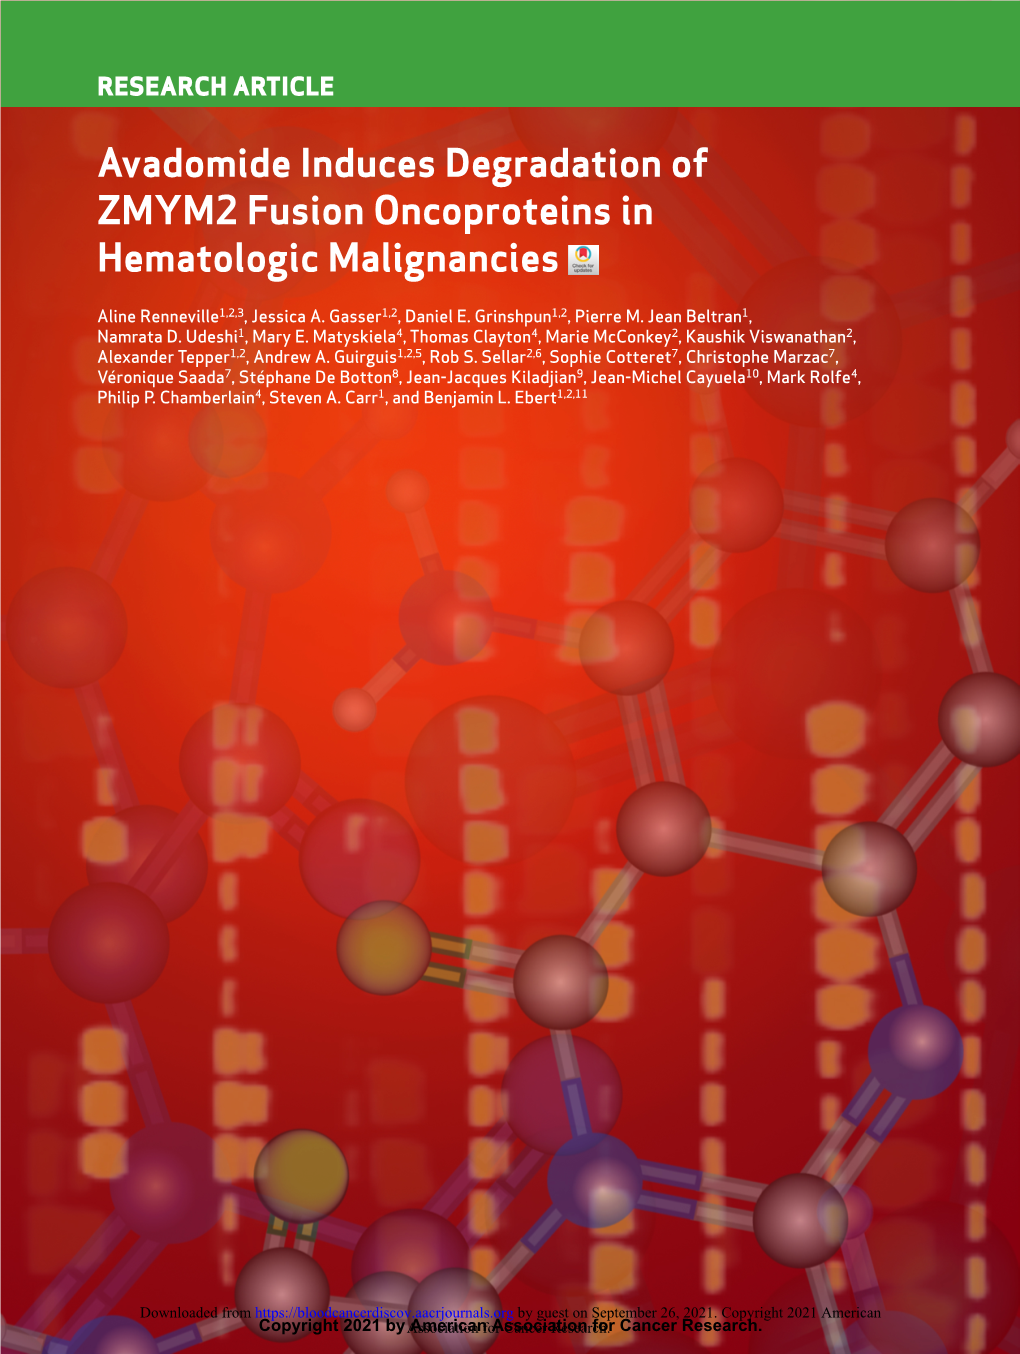 Avadomide Induces Degradation of ZMYM2 Fusion Oncoproteins in Hematologic Malignancies